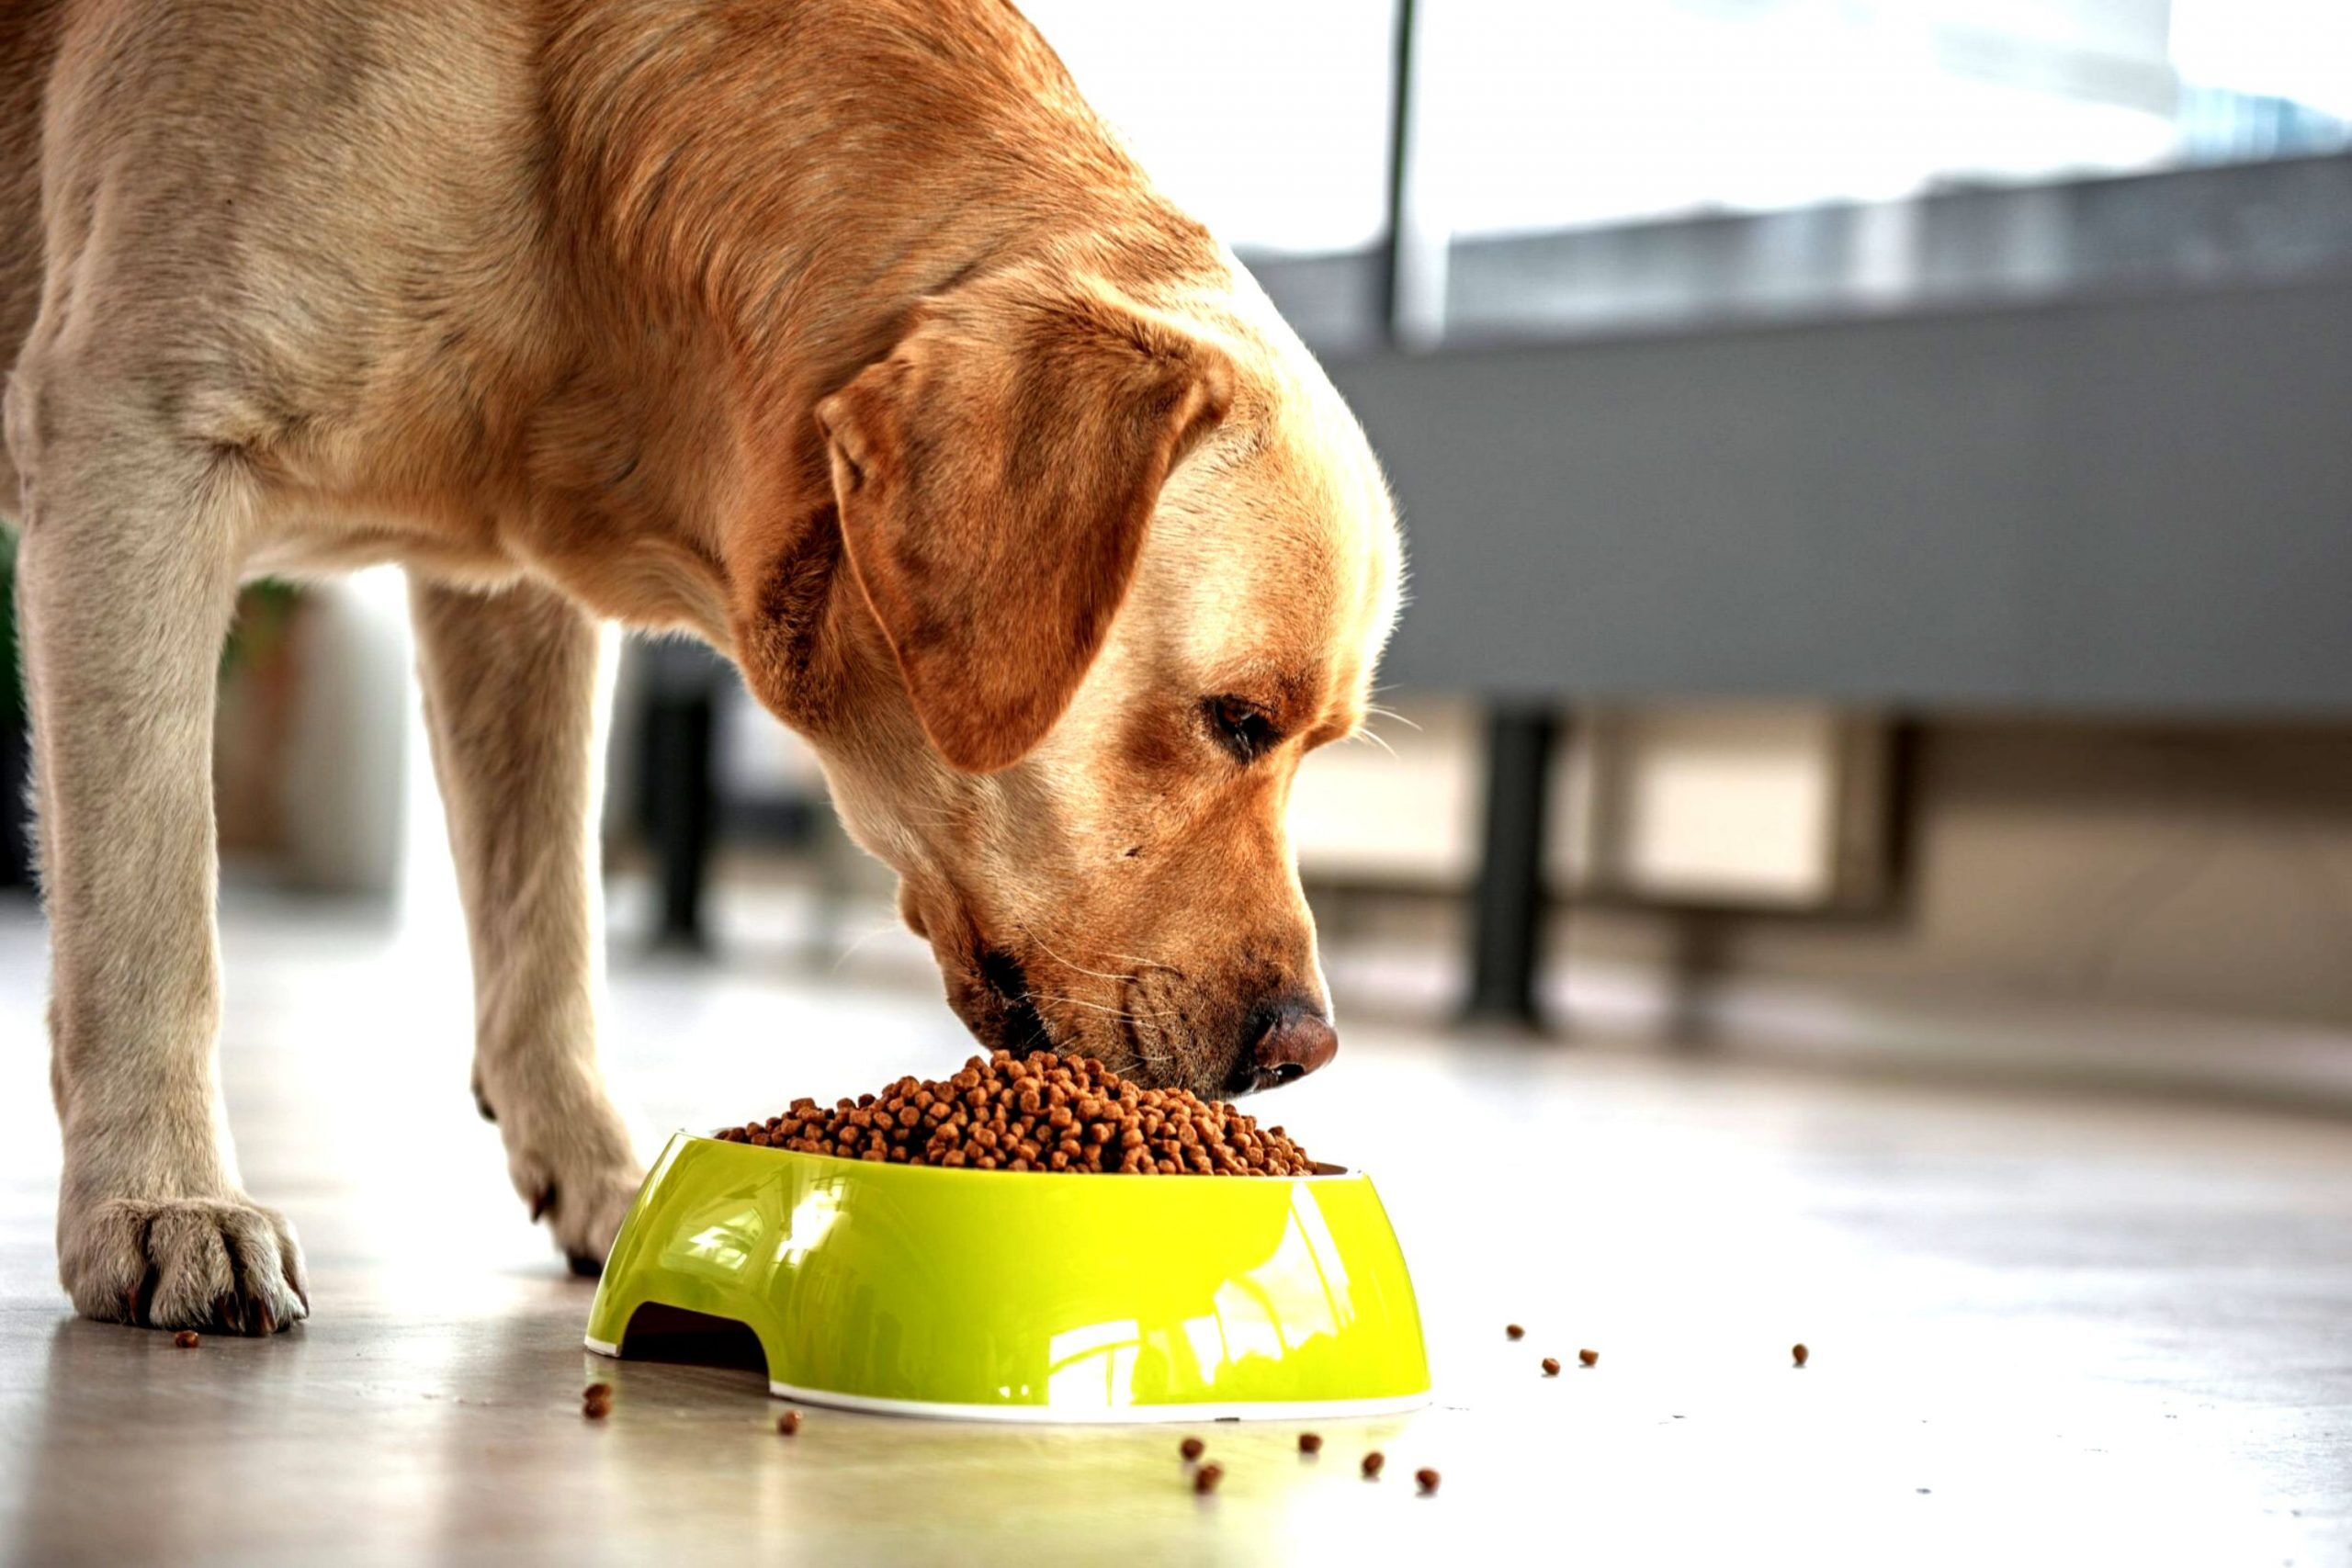 diabetic labrador dog eating food - call Airvet